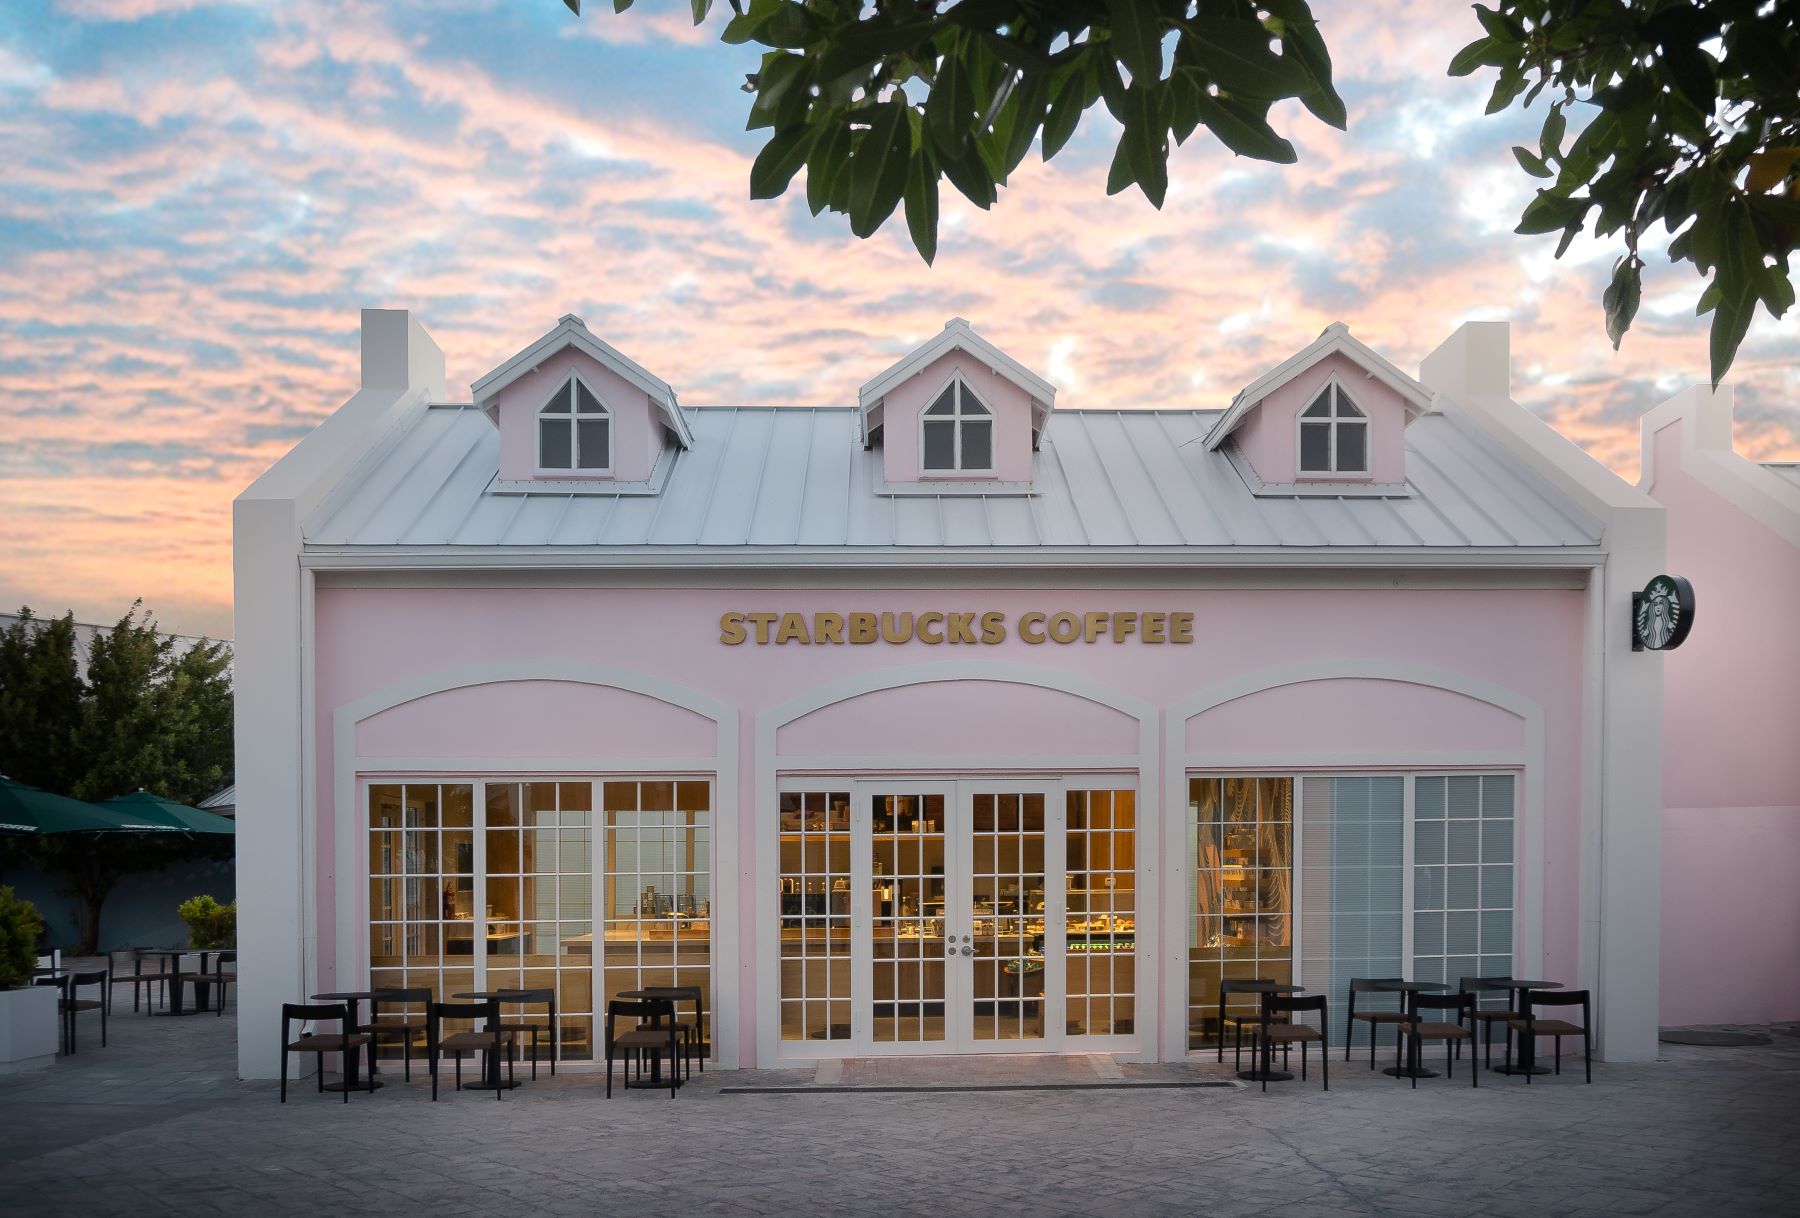 Labor groups nominate 3 to the Starbucks board [Video]